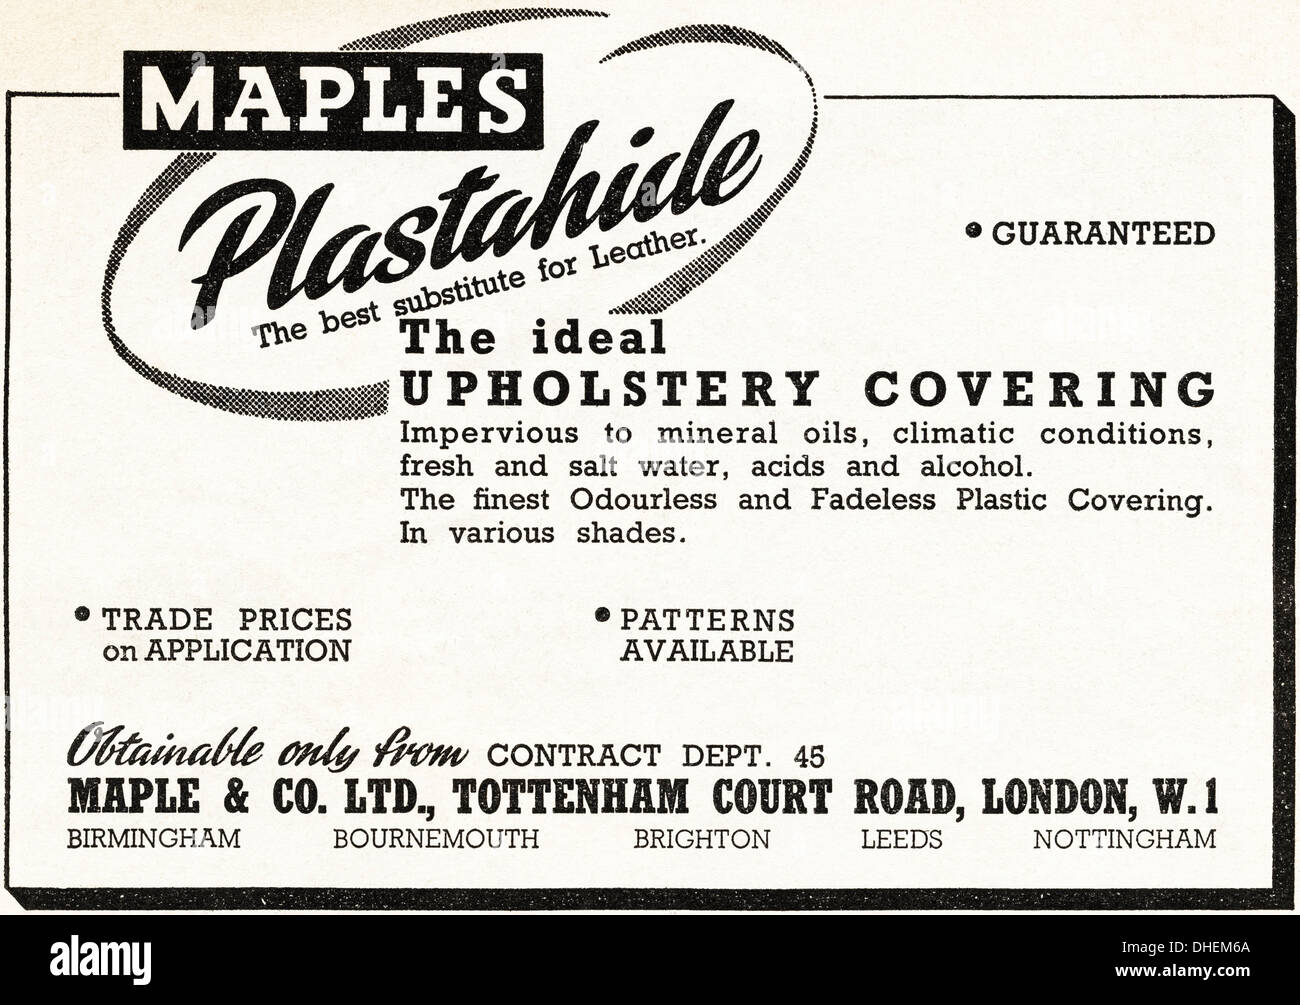 Advertisement advertising MAPLES PLASTAHIDE leather substitute for motor car upholstery motoring magazine advert circa 1947. Stock Photo